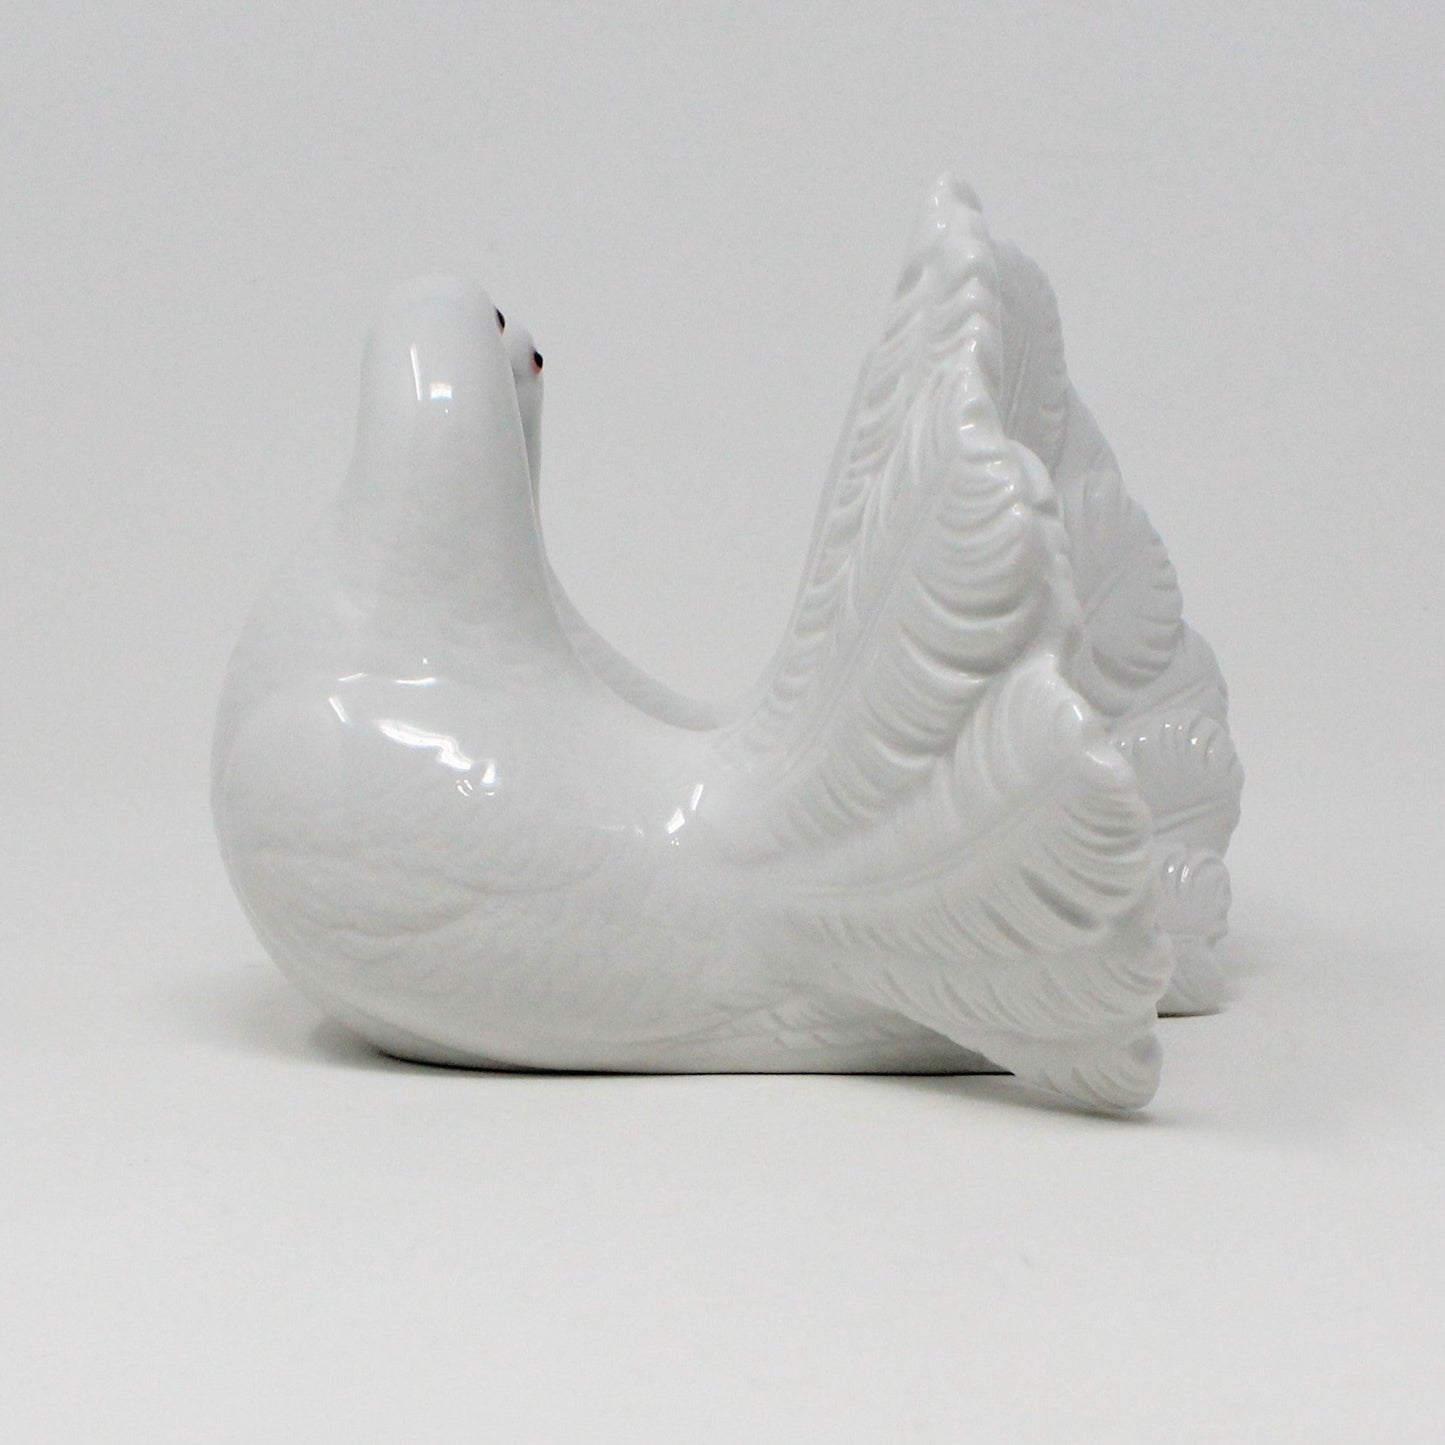 Figurine, Lladro, Couple of Doves, Vintage 1970's